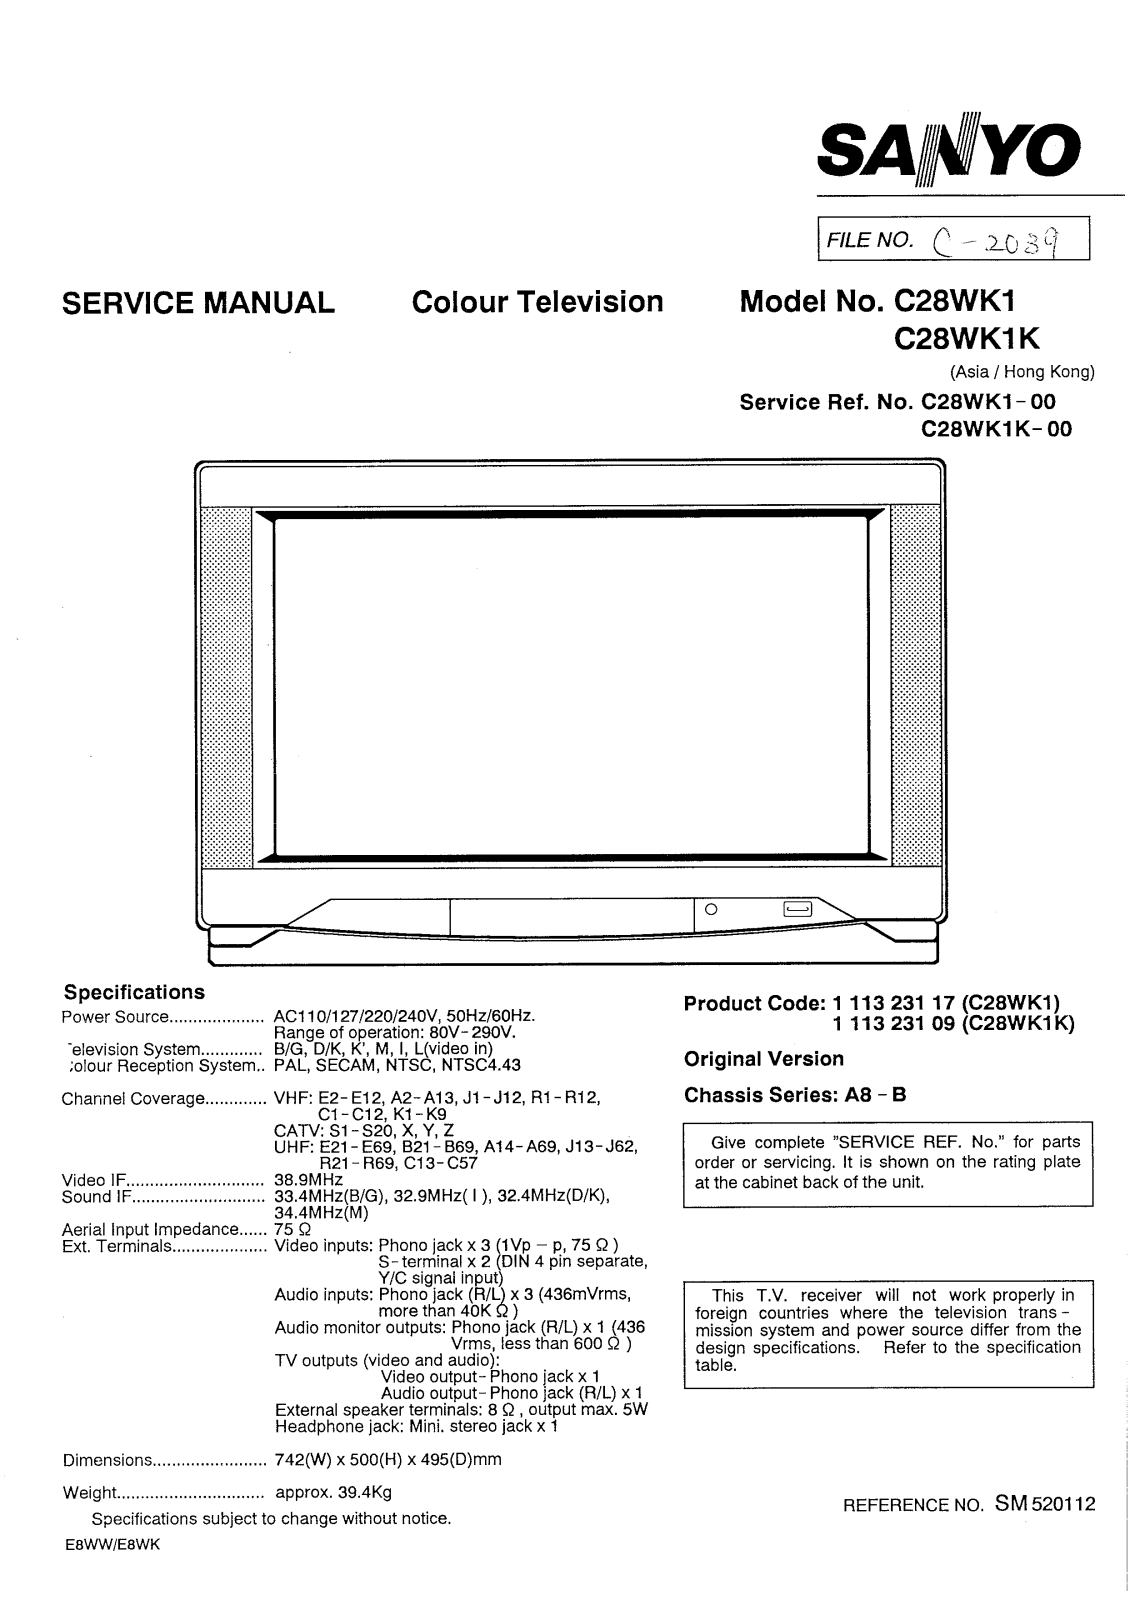 SANYO c28w1 Service Manual 00-16